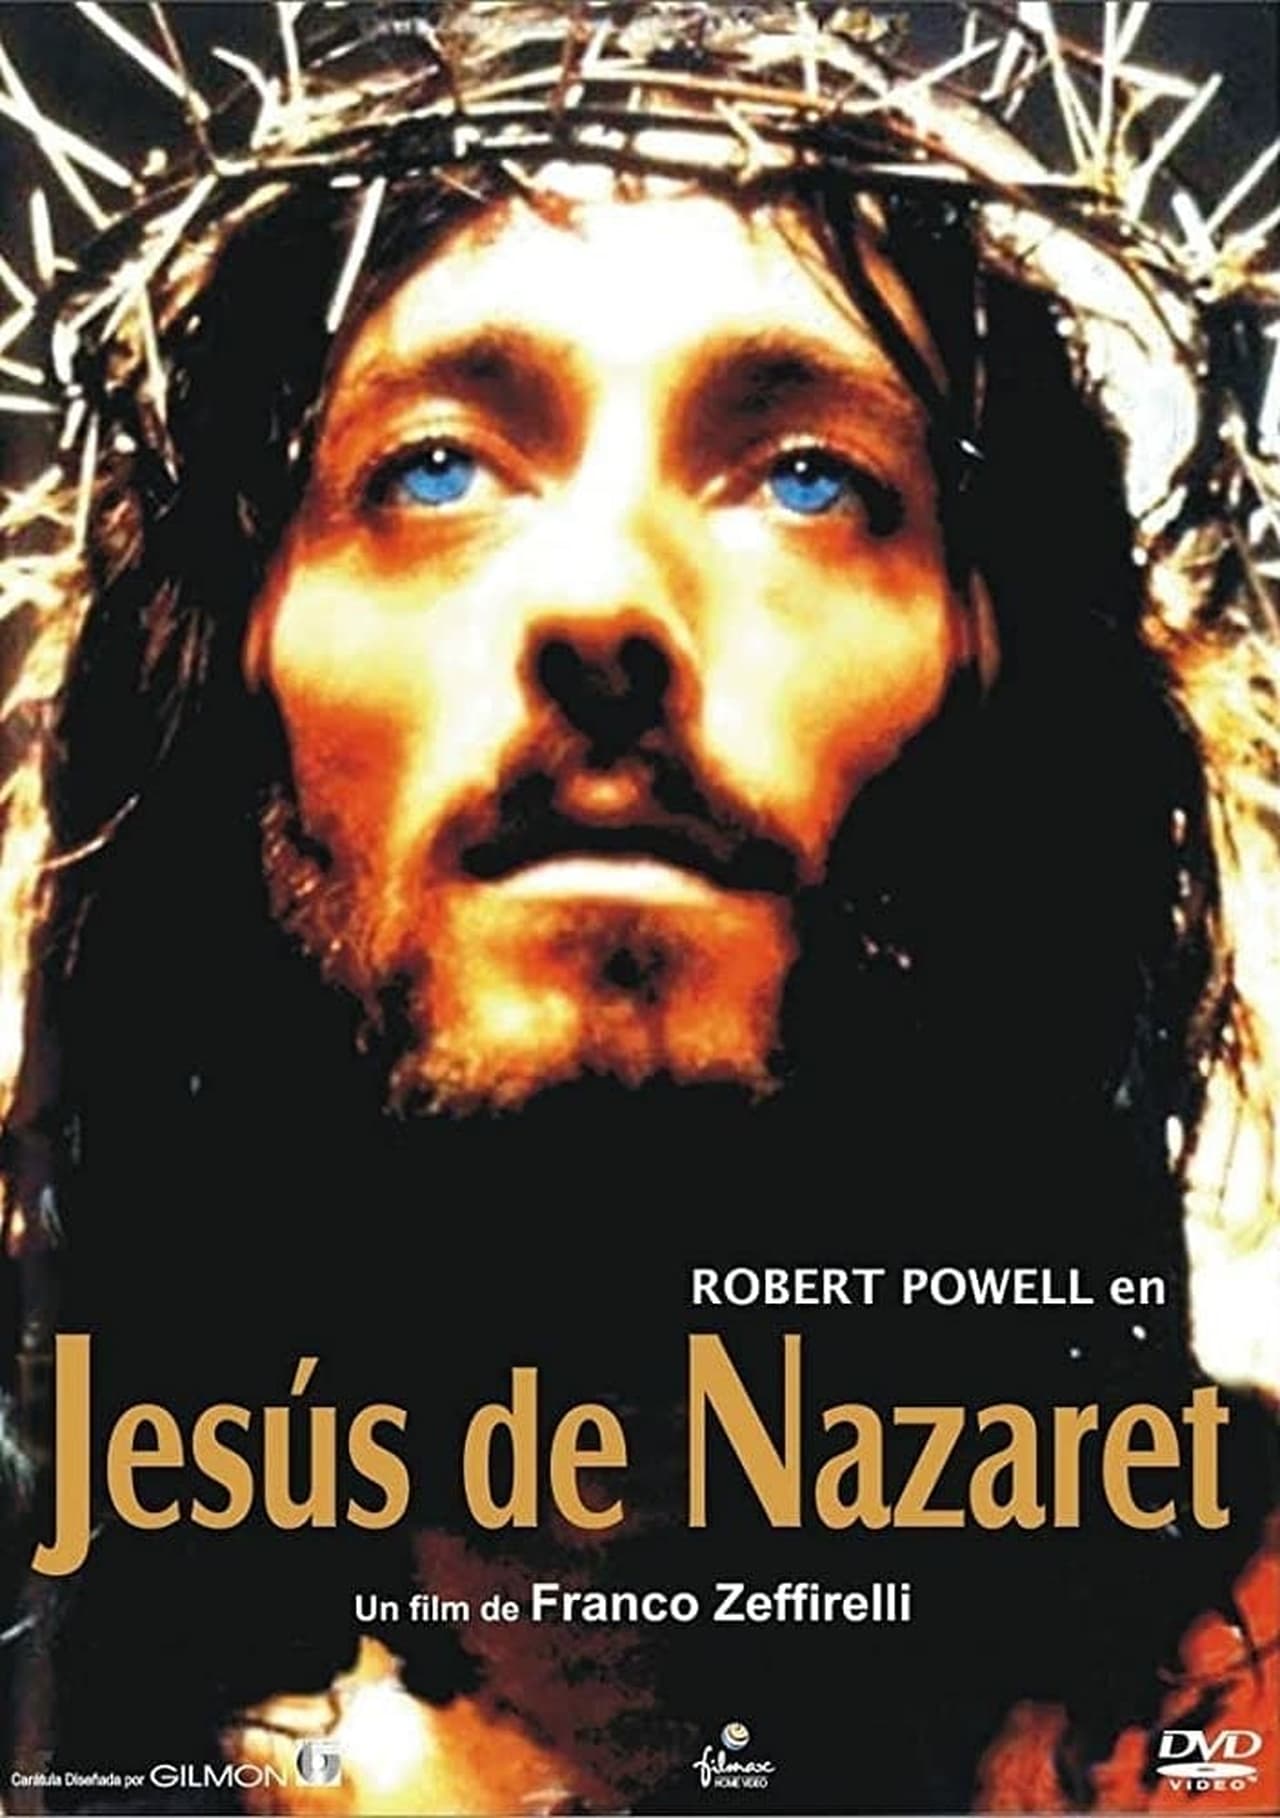 Robert Powell El actor que se convirtió en el rostro de Jesús de Nazaret portada 65